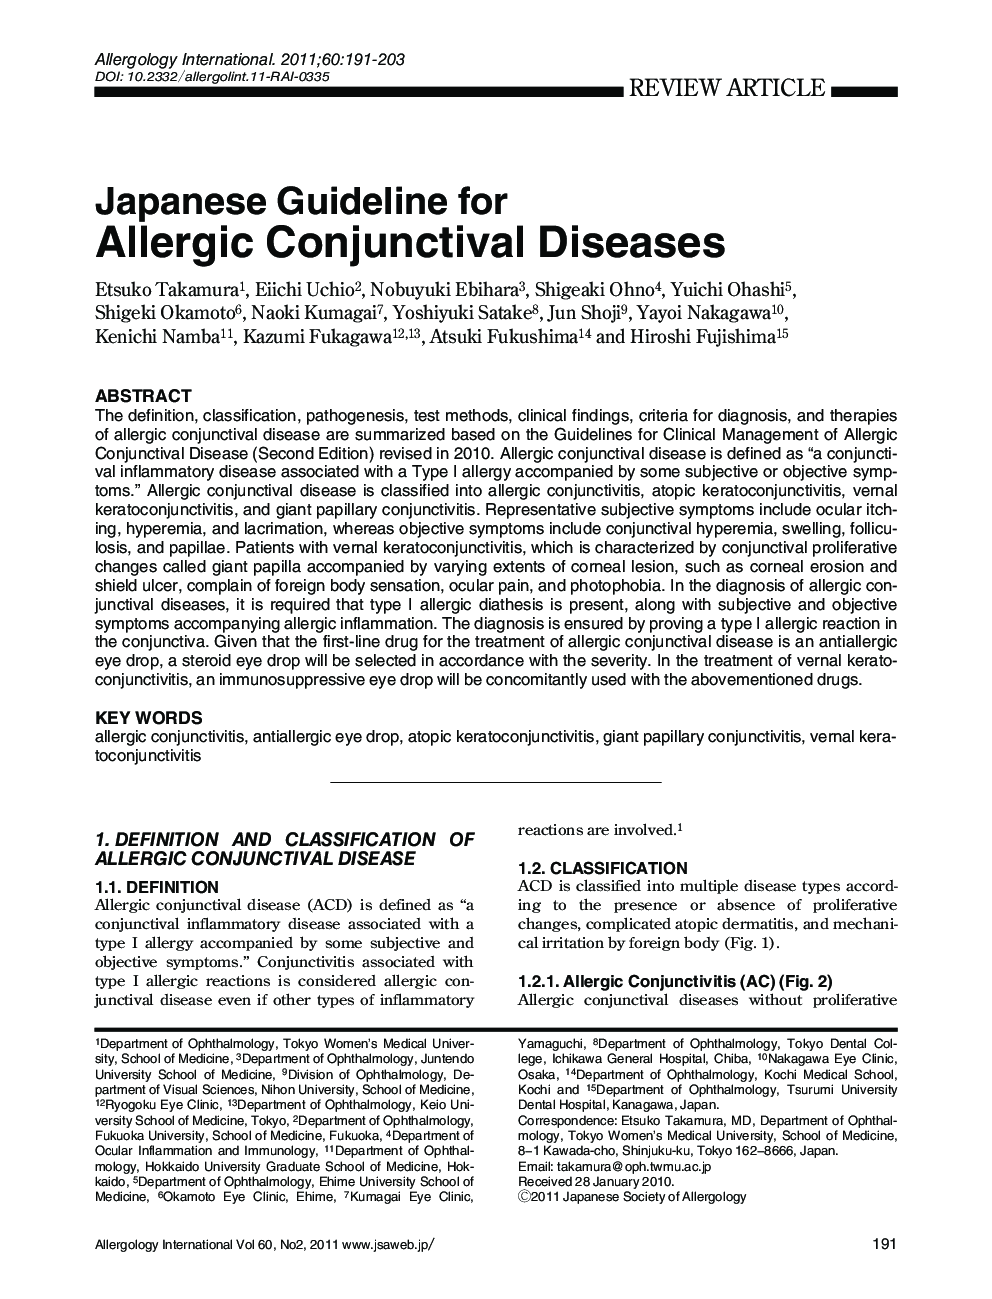 Japanese Guideline for Allergic Conjunctival Diseases